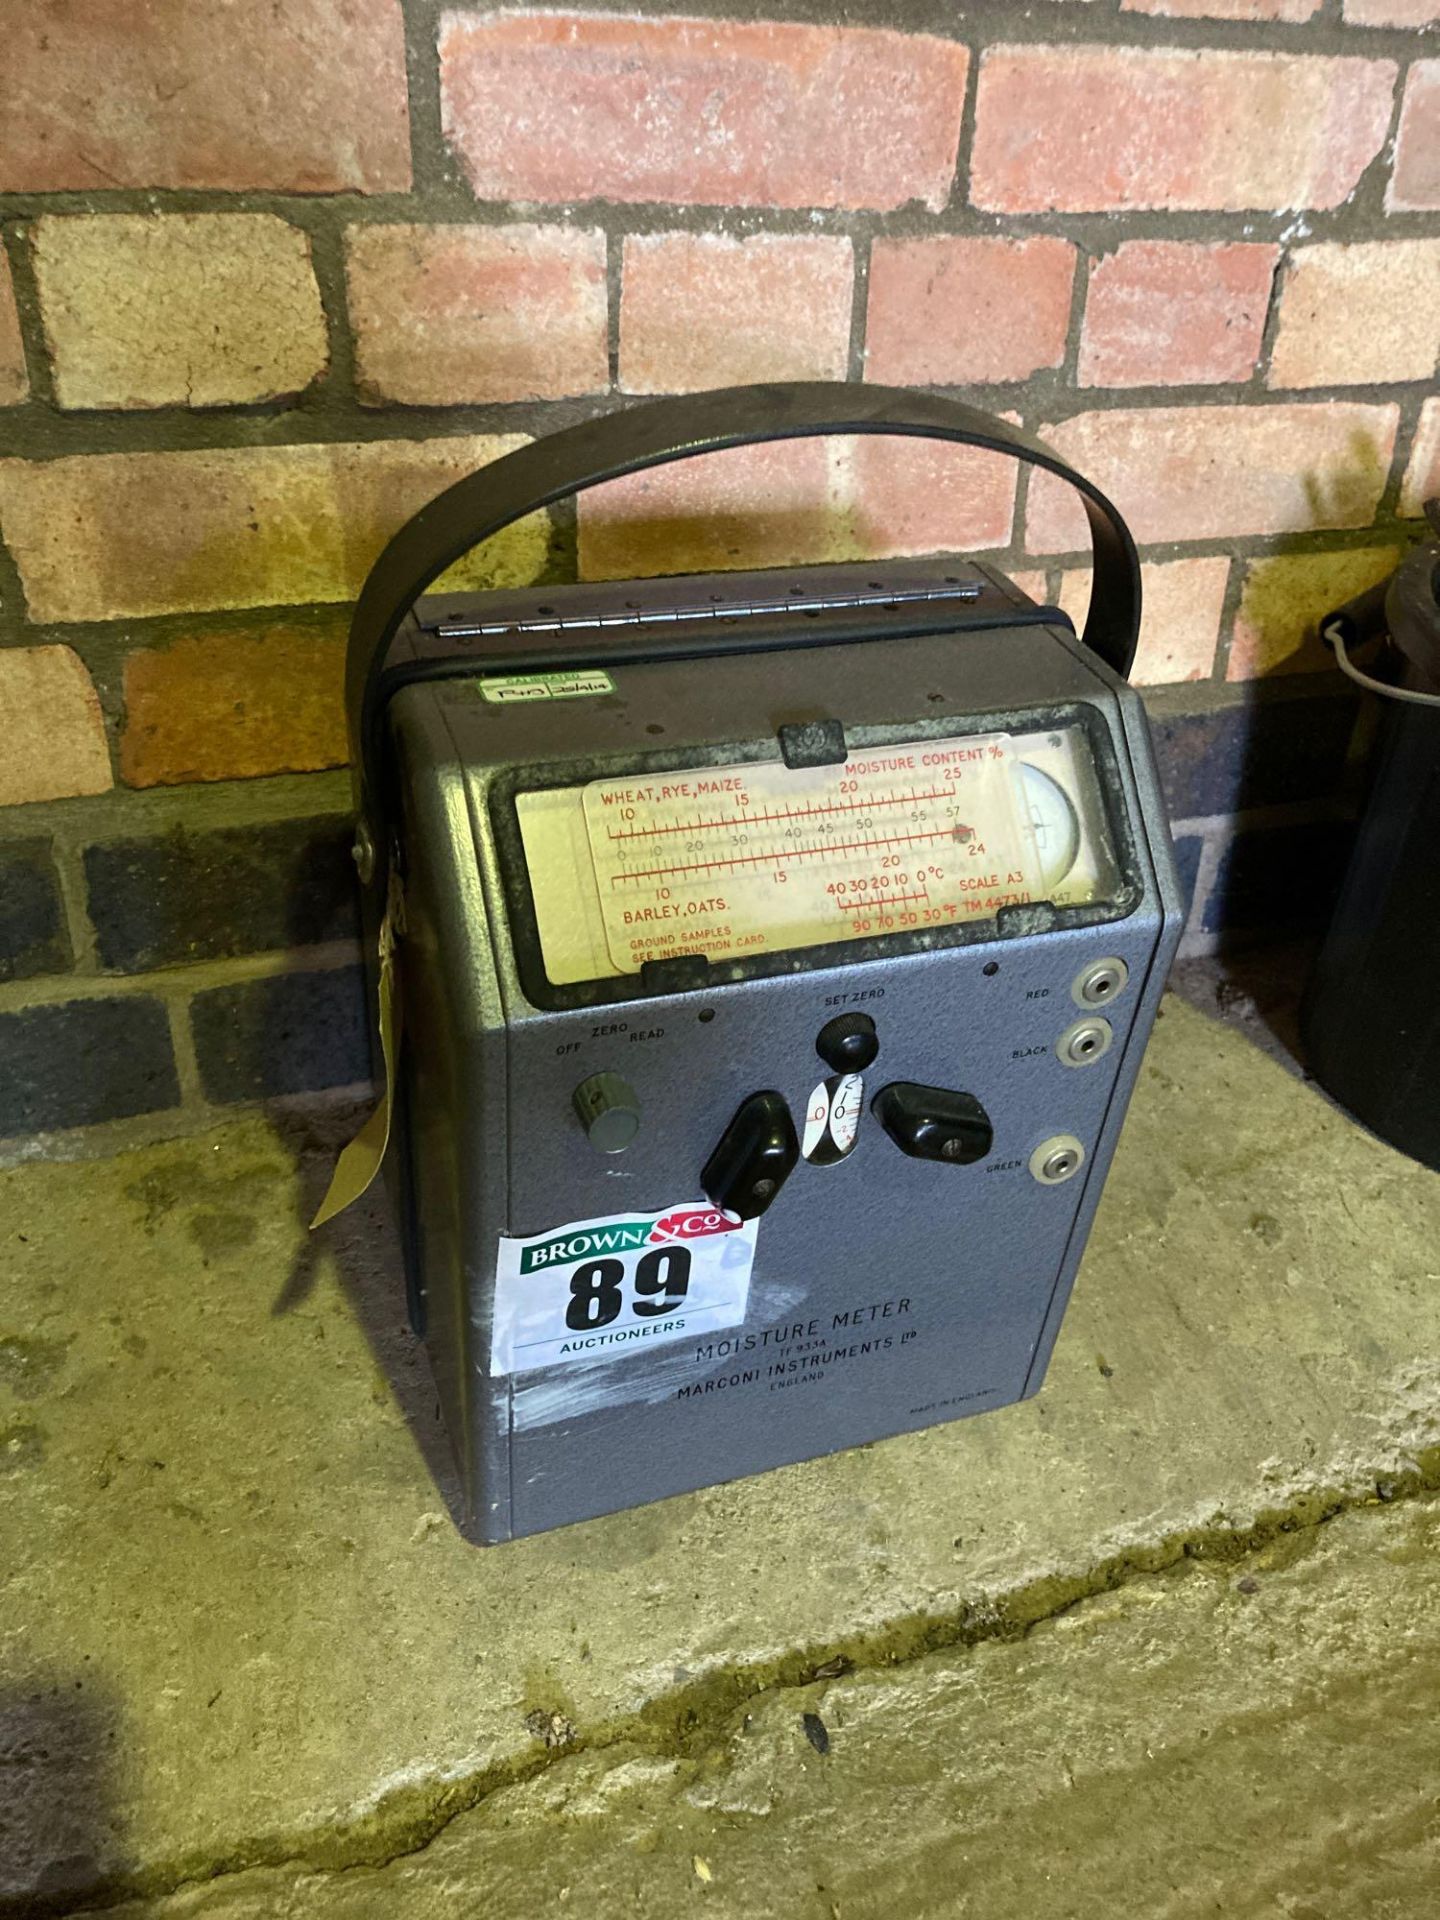 Marconi Instrucments Ltd moisture meter